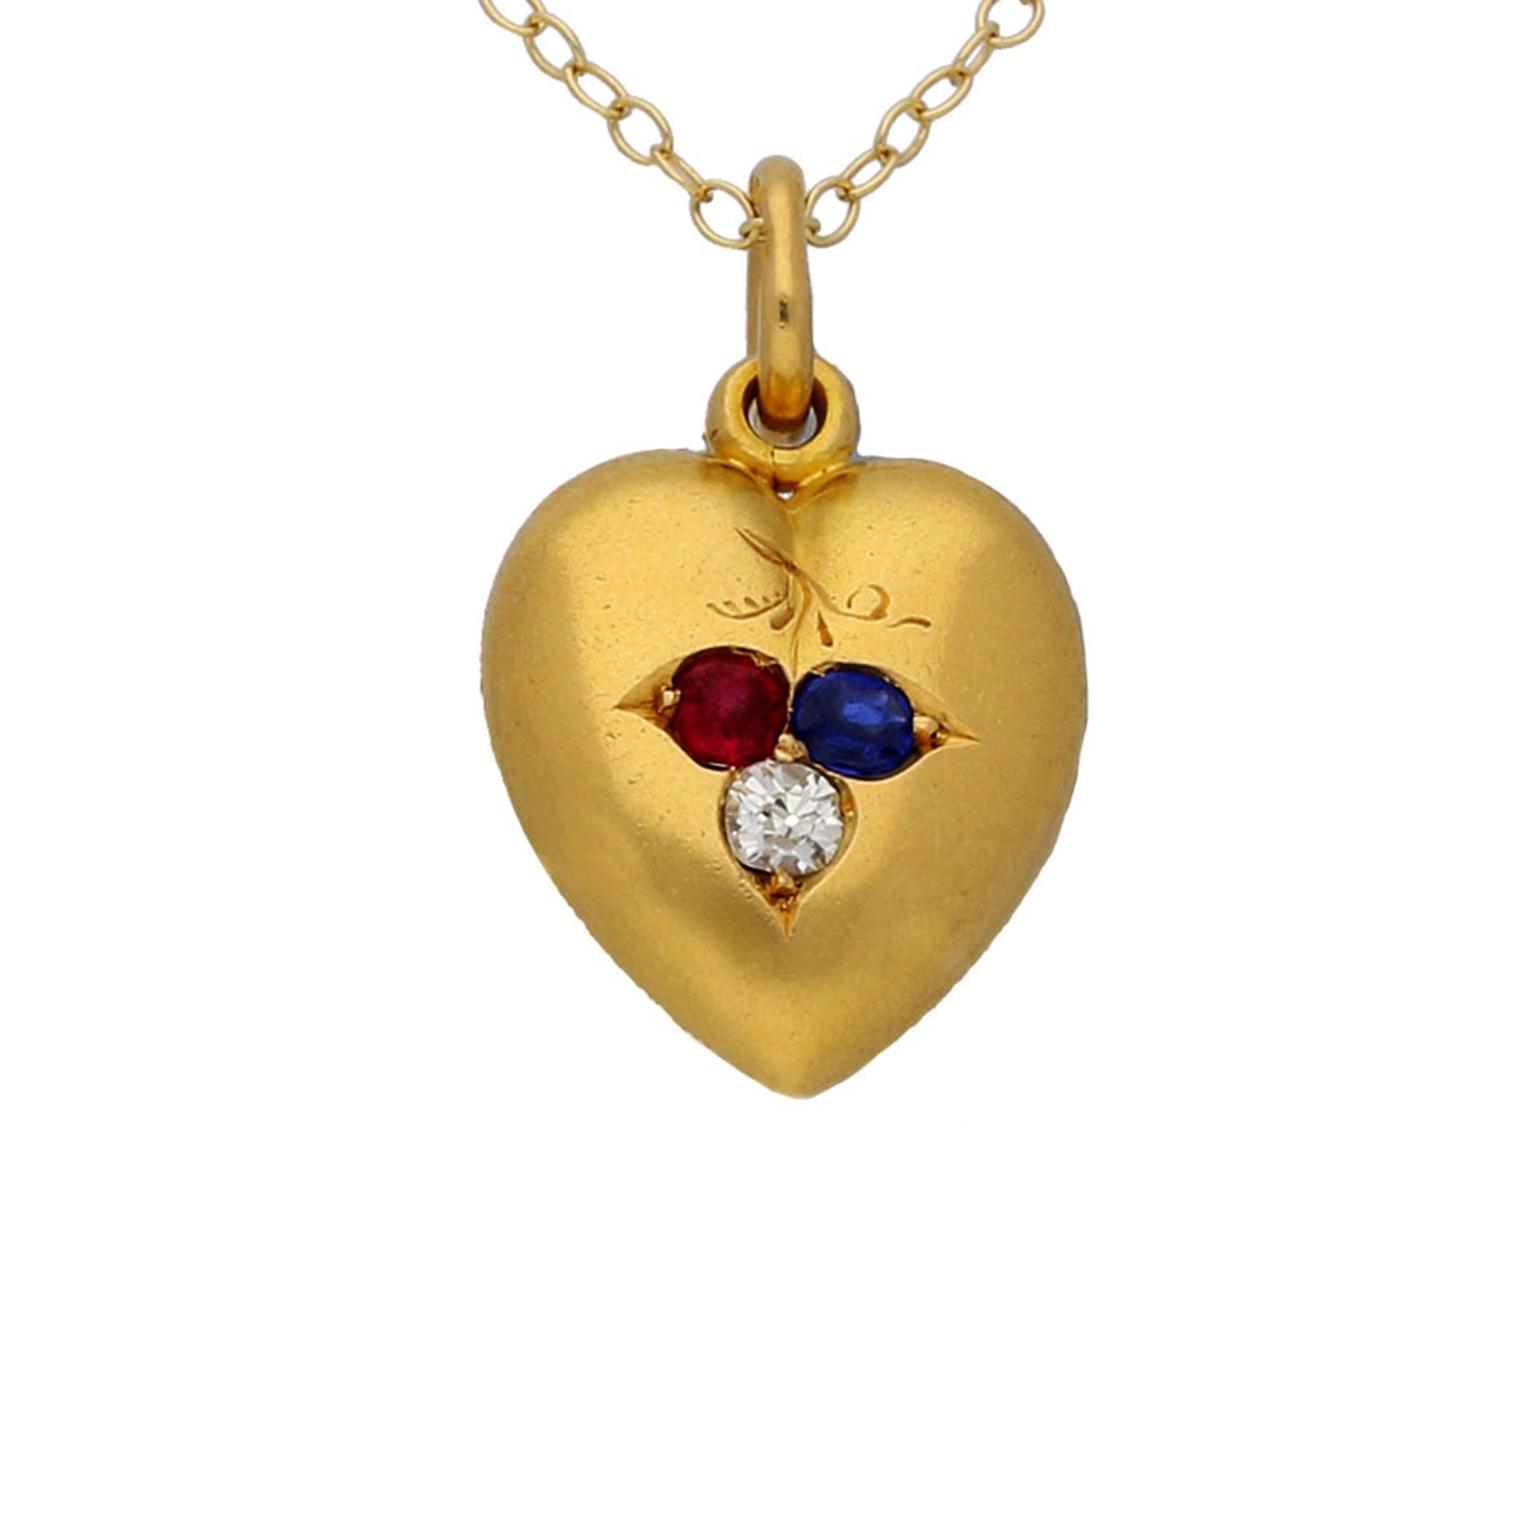 Berganza gold heart-shaped locket